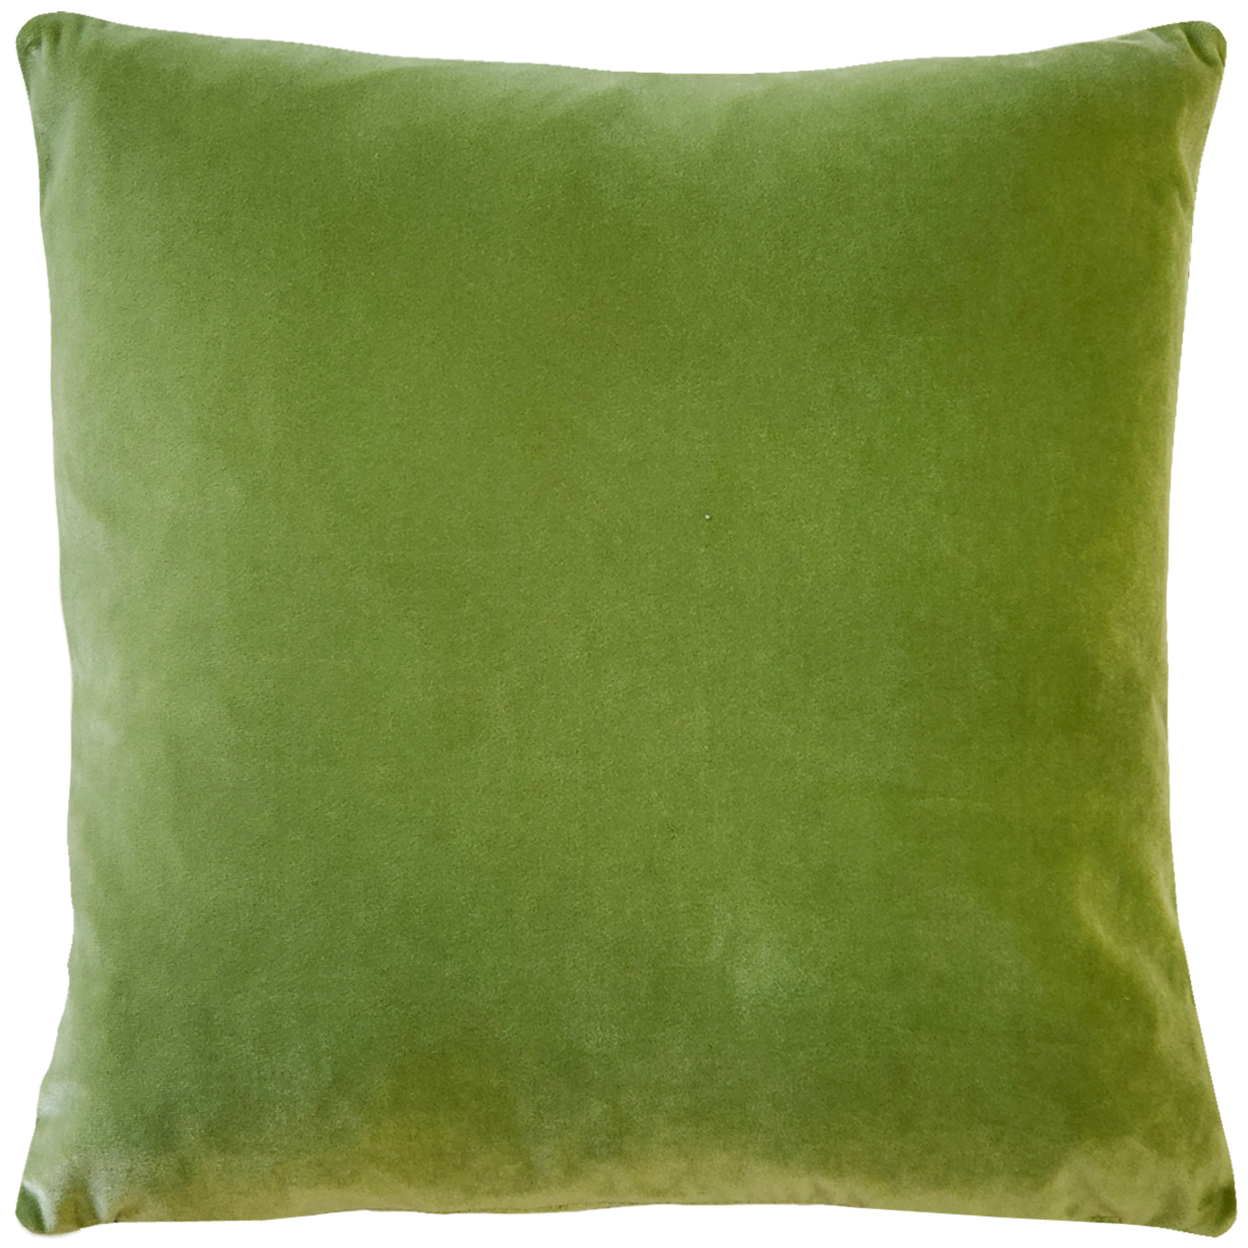 Castello Velvet Throw Pillows, Complete Pillow With Polyfill Pillow Insert (18 Colors, 3 Sizes) - Summer Green, 17x17